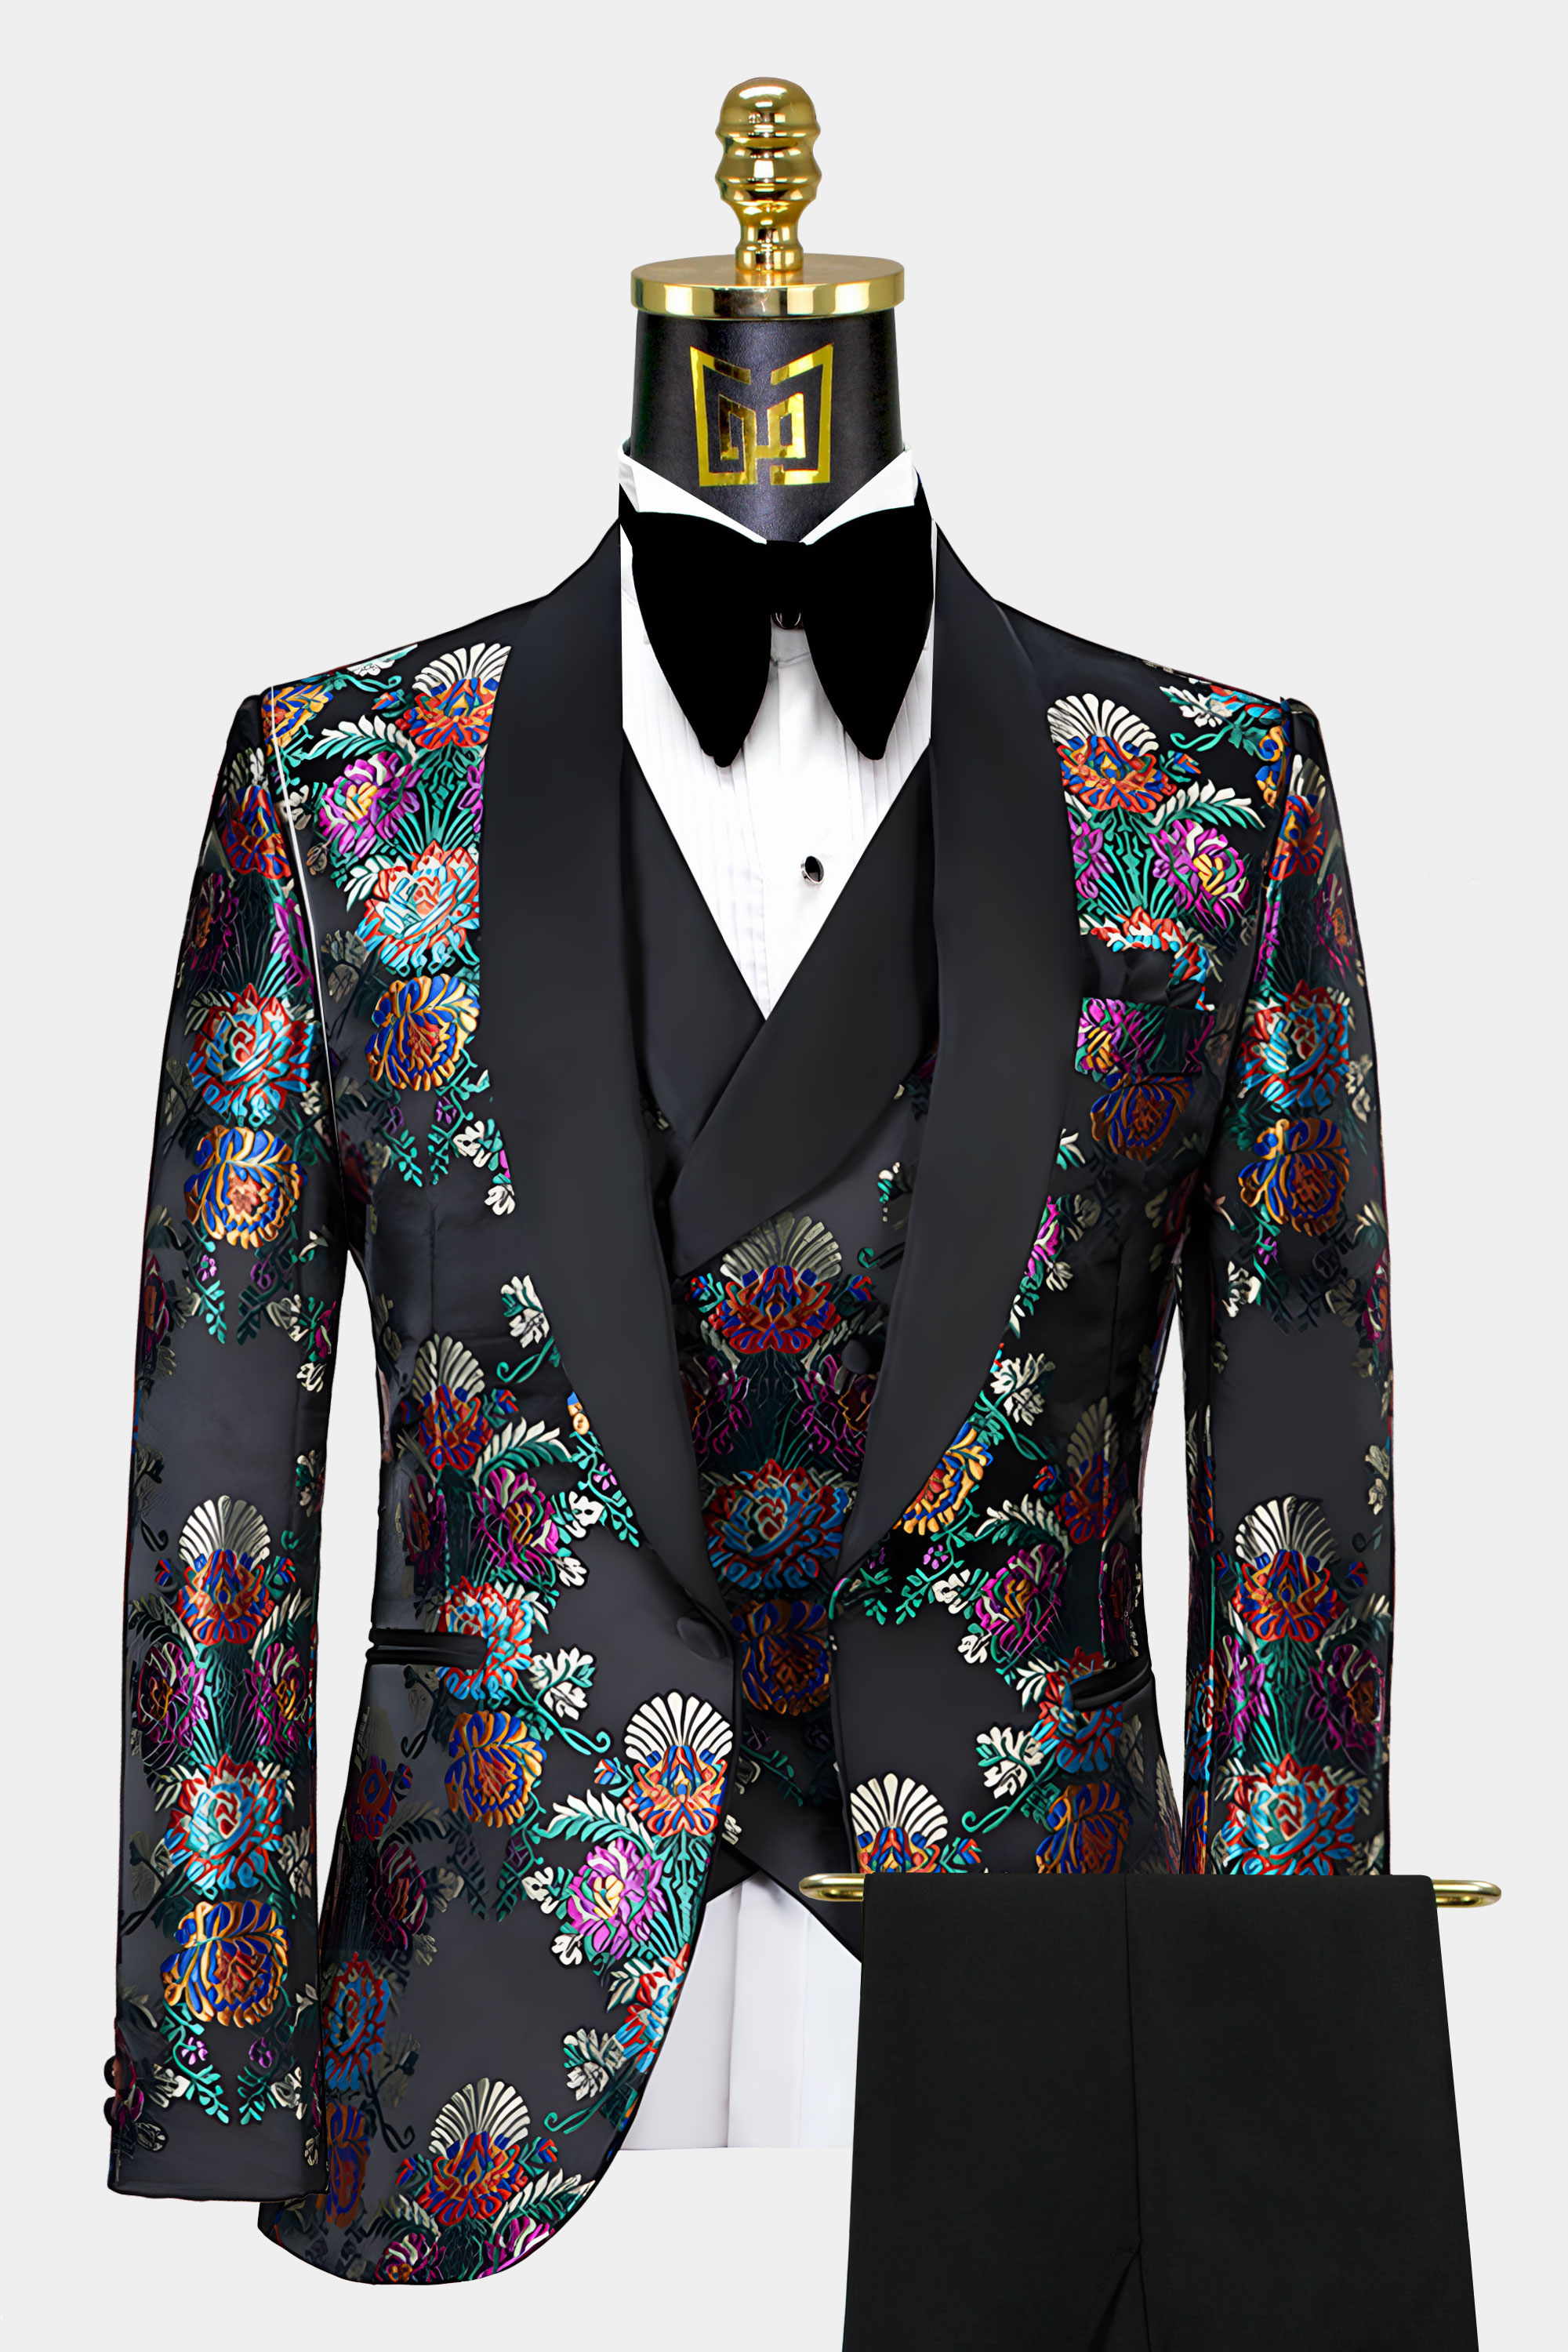 Multi Color Tuxedo Suit - 3 Piece | Gentleman's Guru